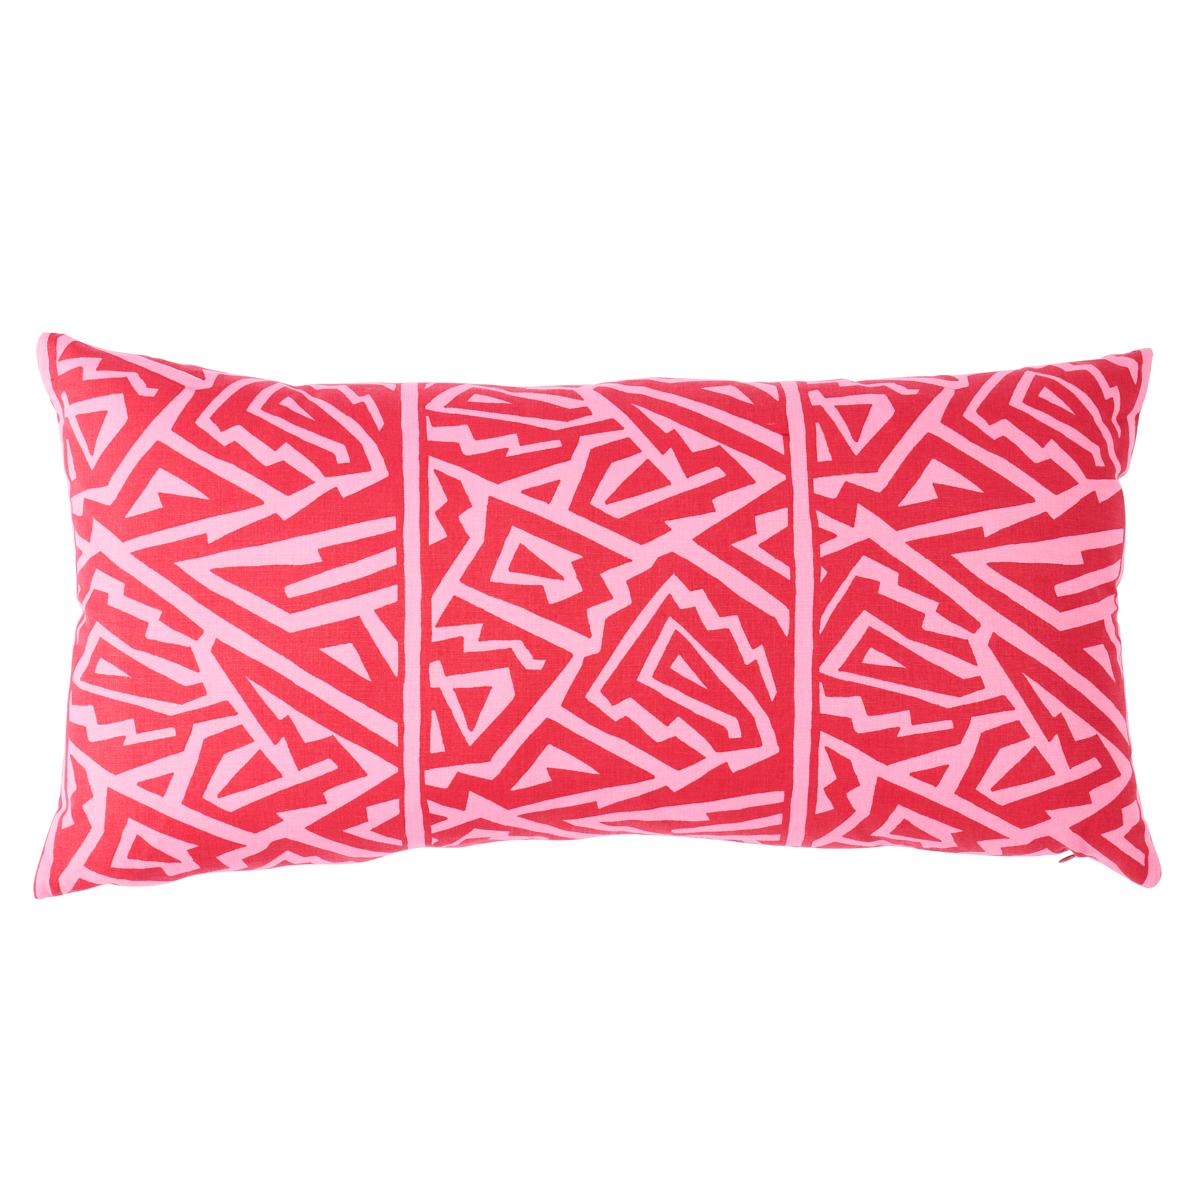 Schumacher Jagged Maze 24" x 12" Pillow in Pink For Sale